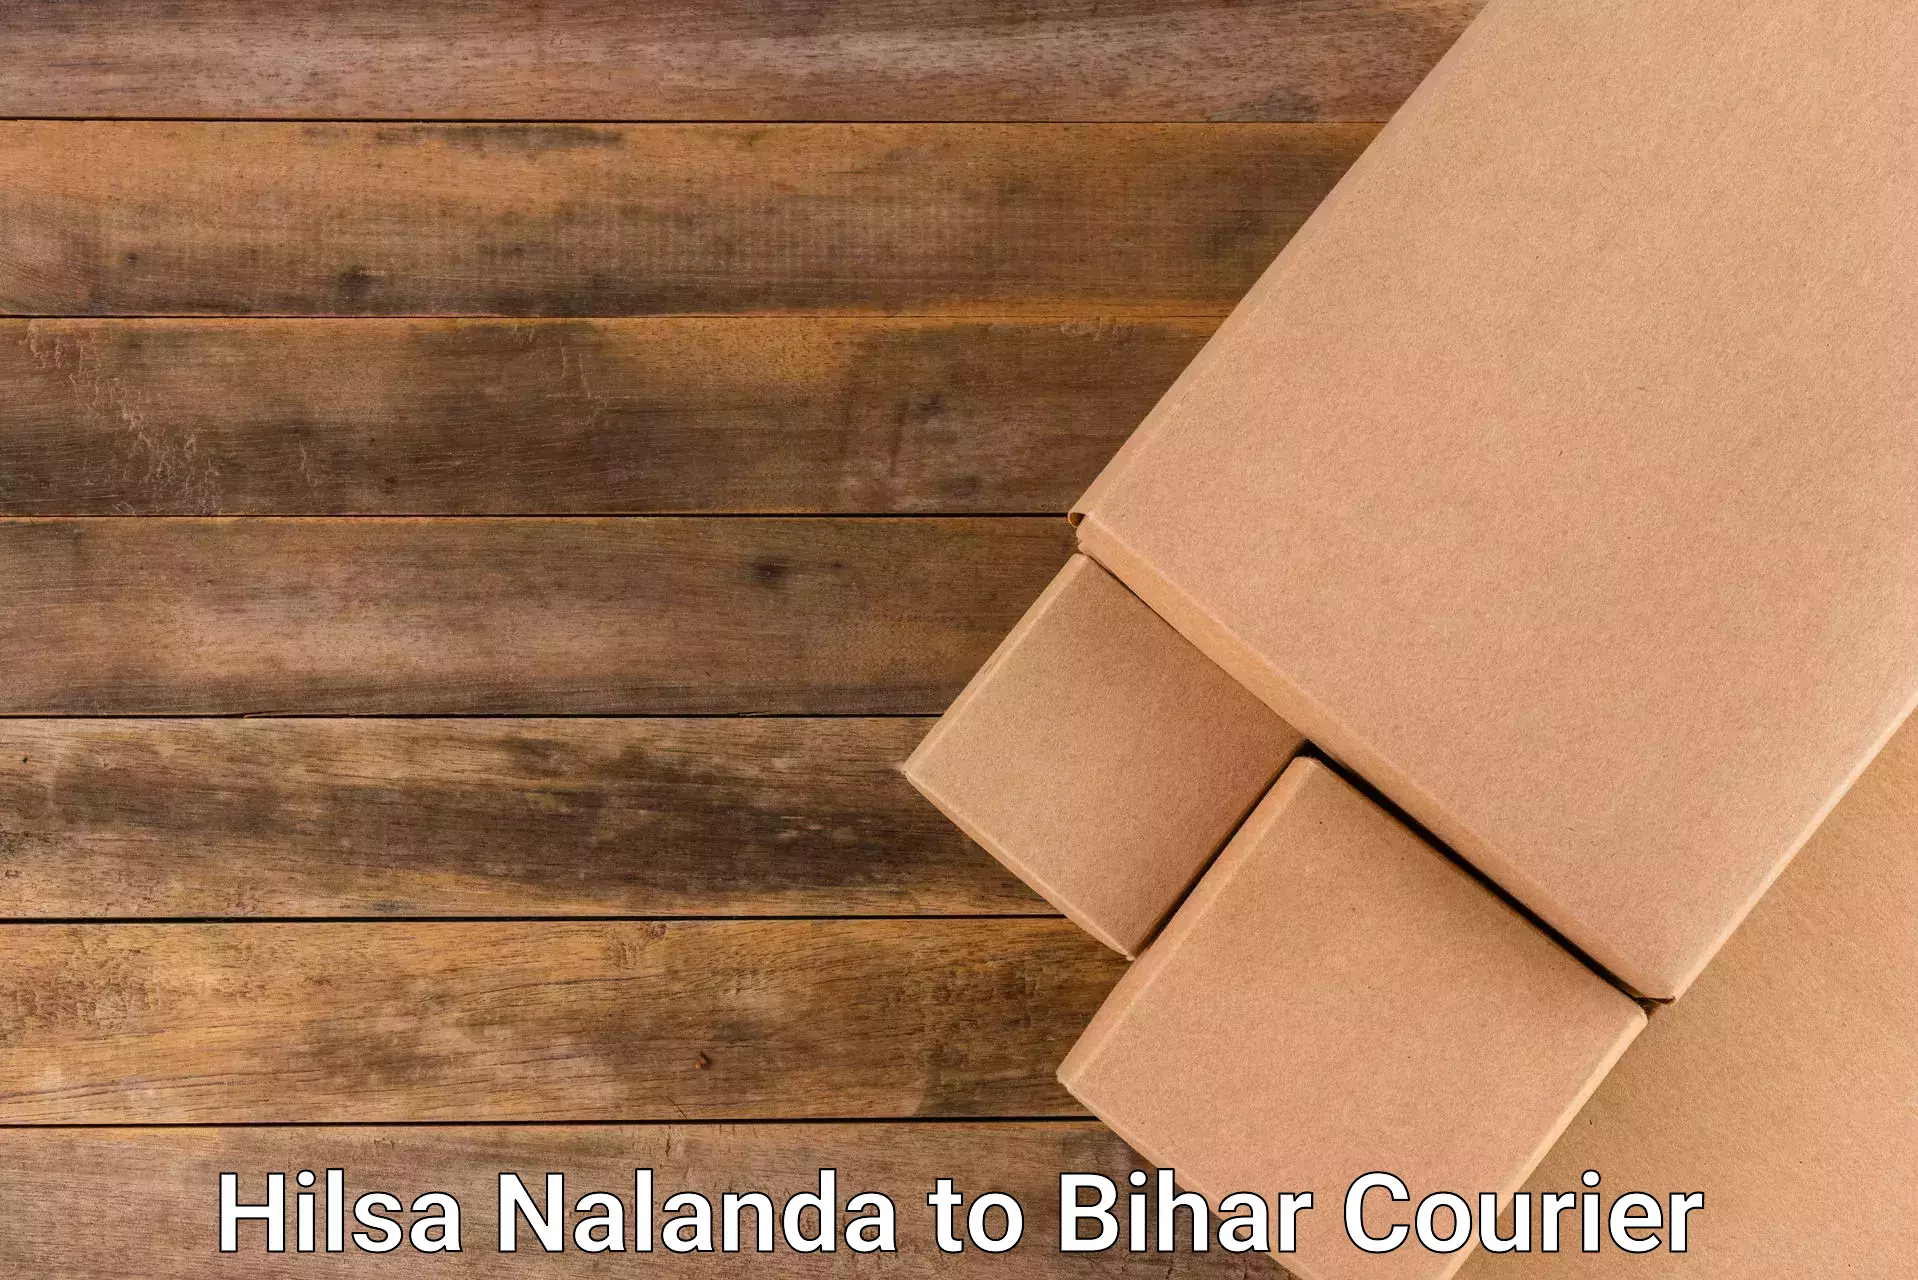 Tech-enabled shipping Hilsa Nalanda to Bankipore